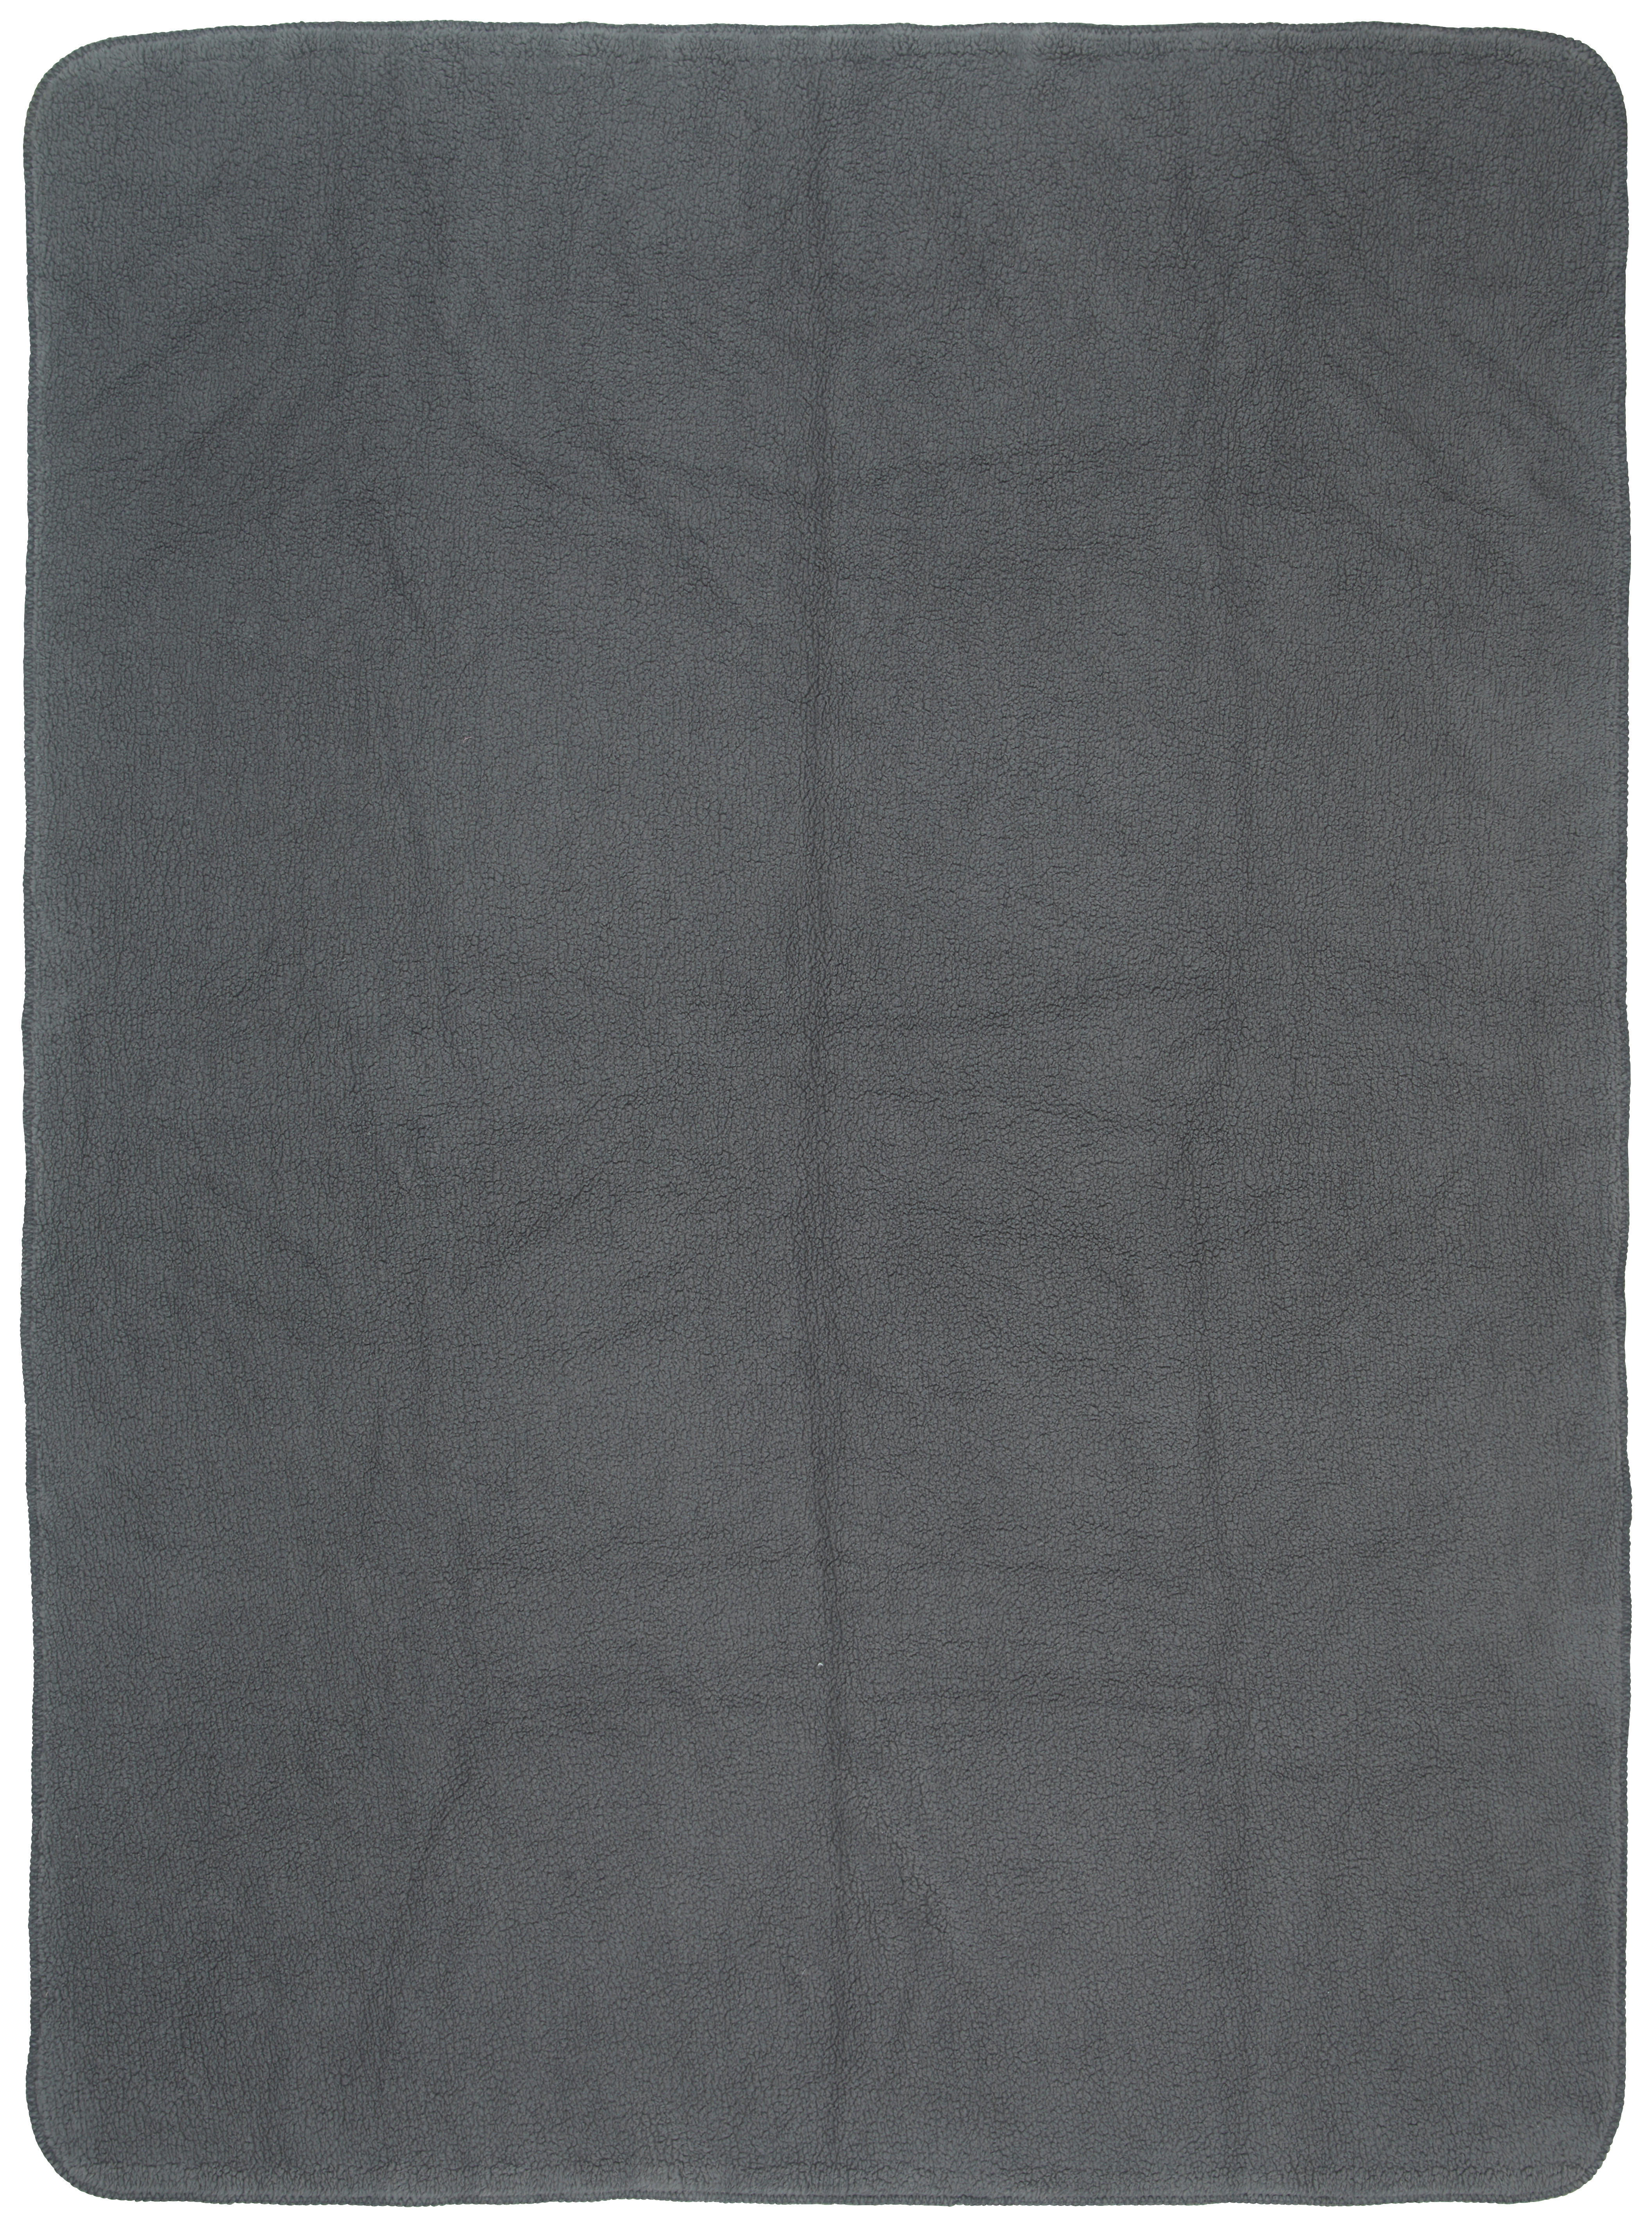 PLAID Teddy 150/200 cm  - Anthrazit, KONVENTIONELL, Textil (150/200cm) - Novel